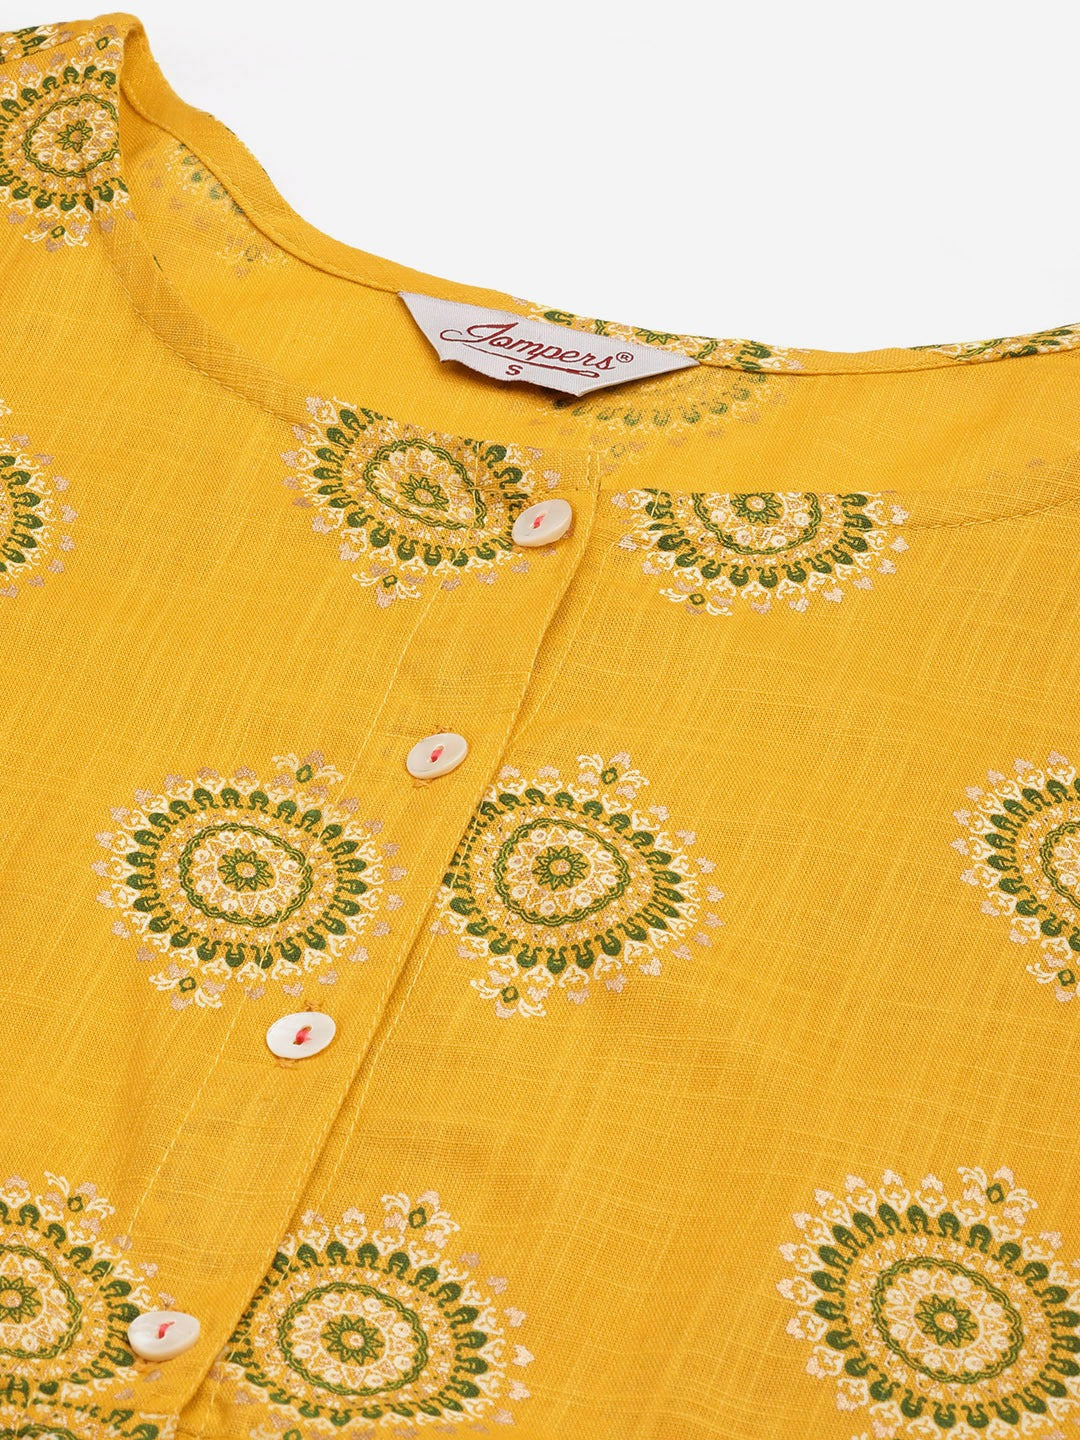 Women's Yellow and Red Cotton Blend Flared Printed kurta ( JOK 1425 Yellow ) - Jompers